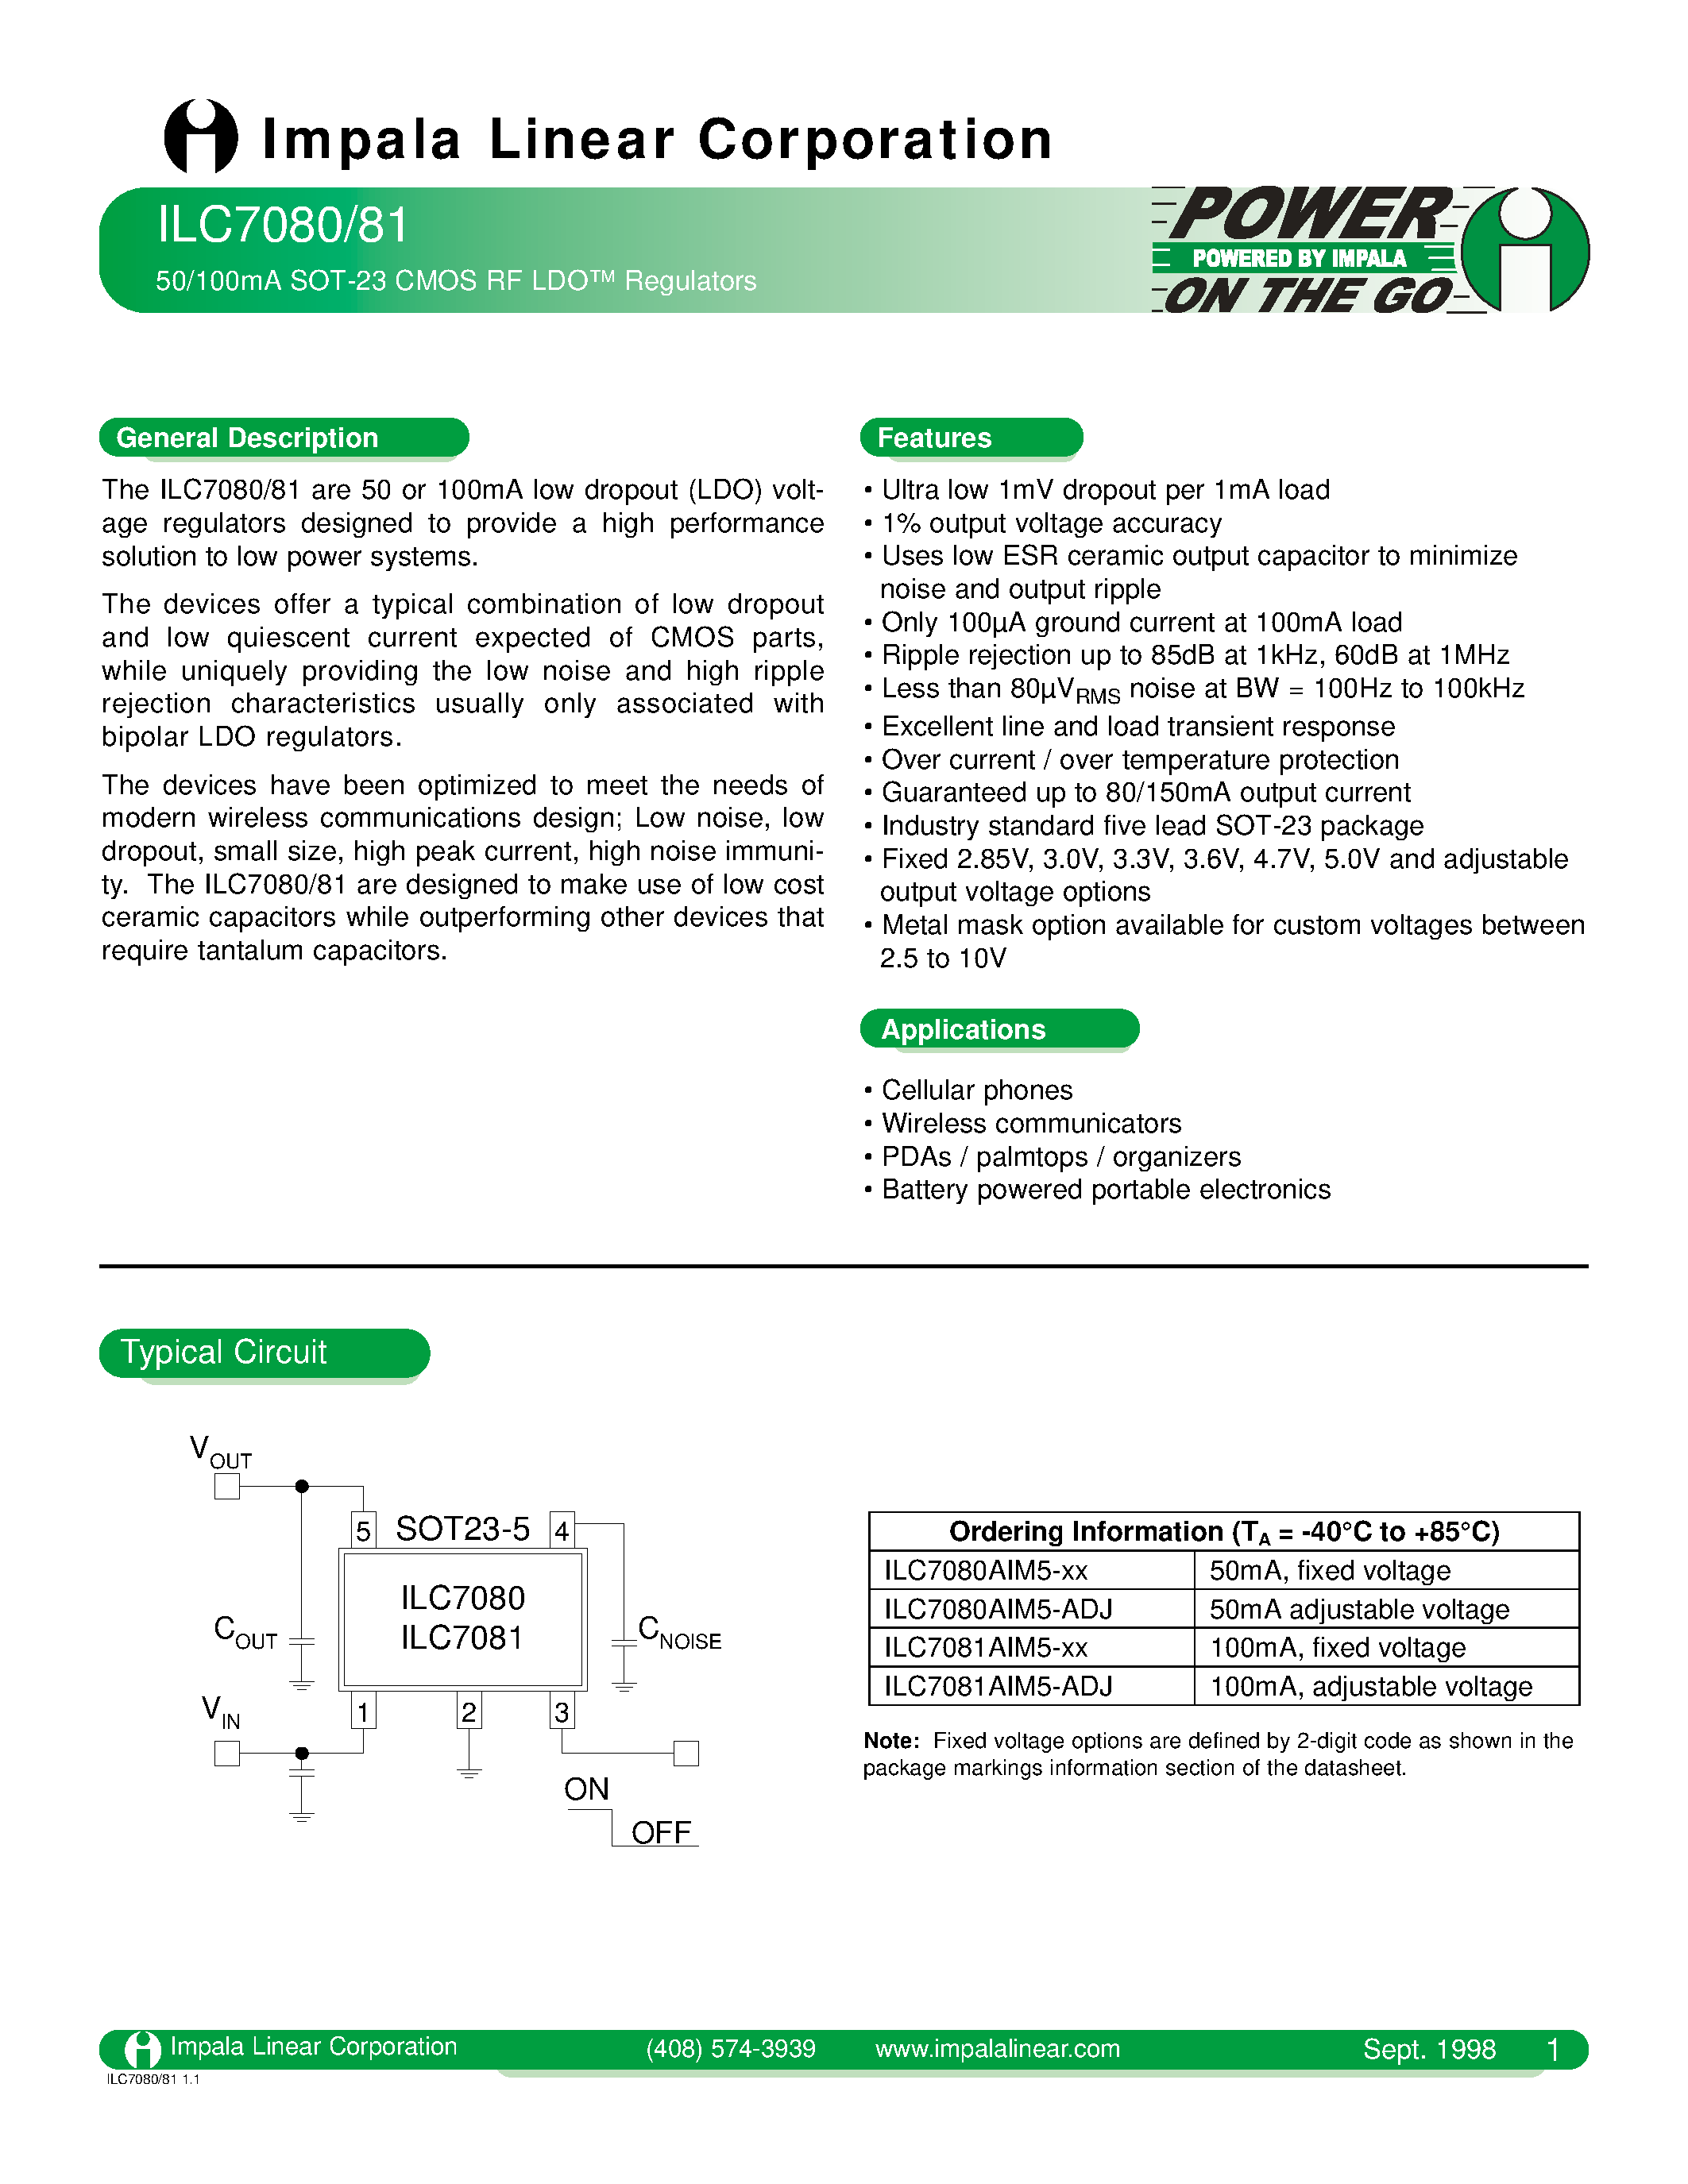 Datasheet ILC7080 - 50/100M SOT-23 CMOS RF LDO REGULATORS page 1